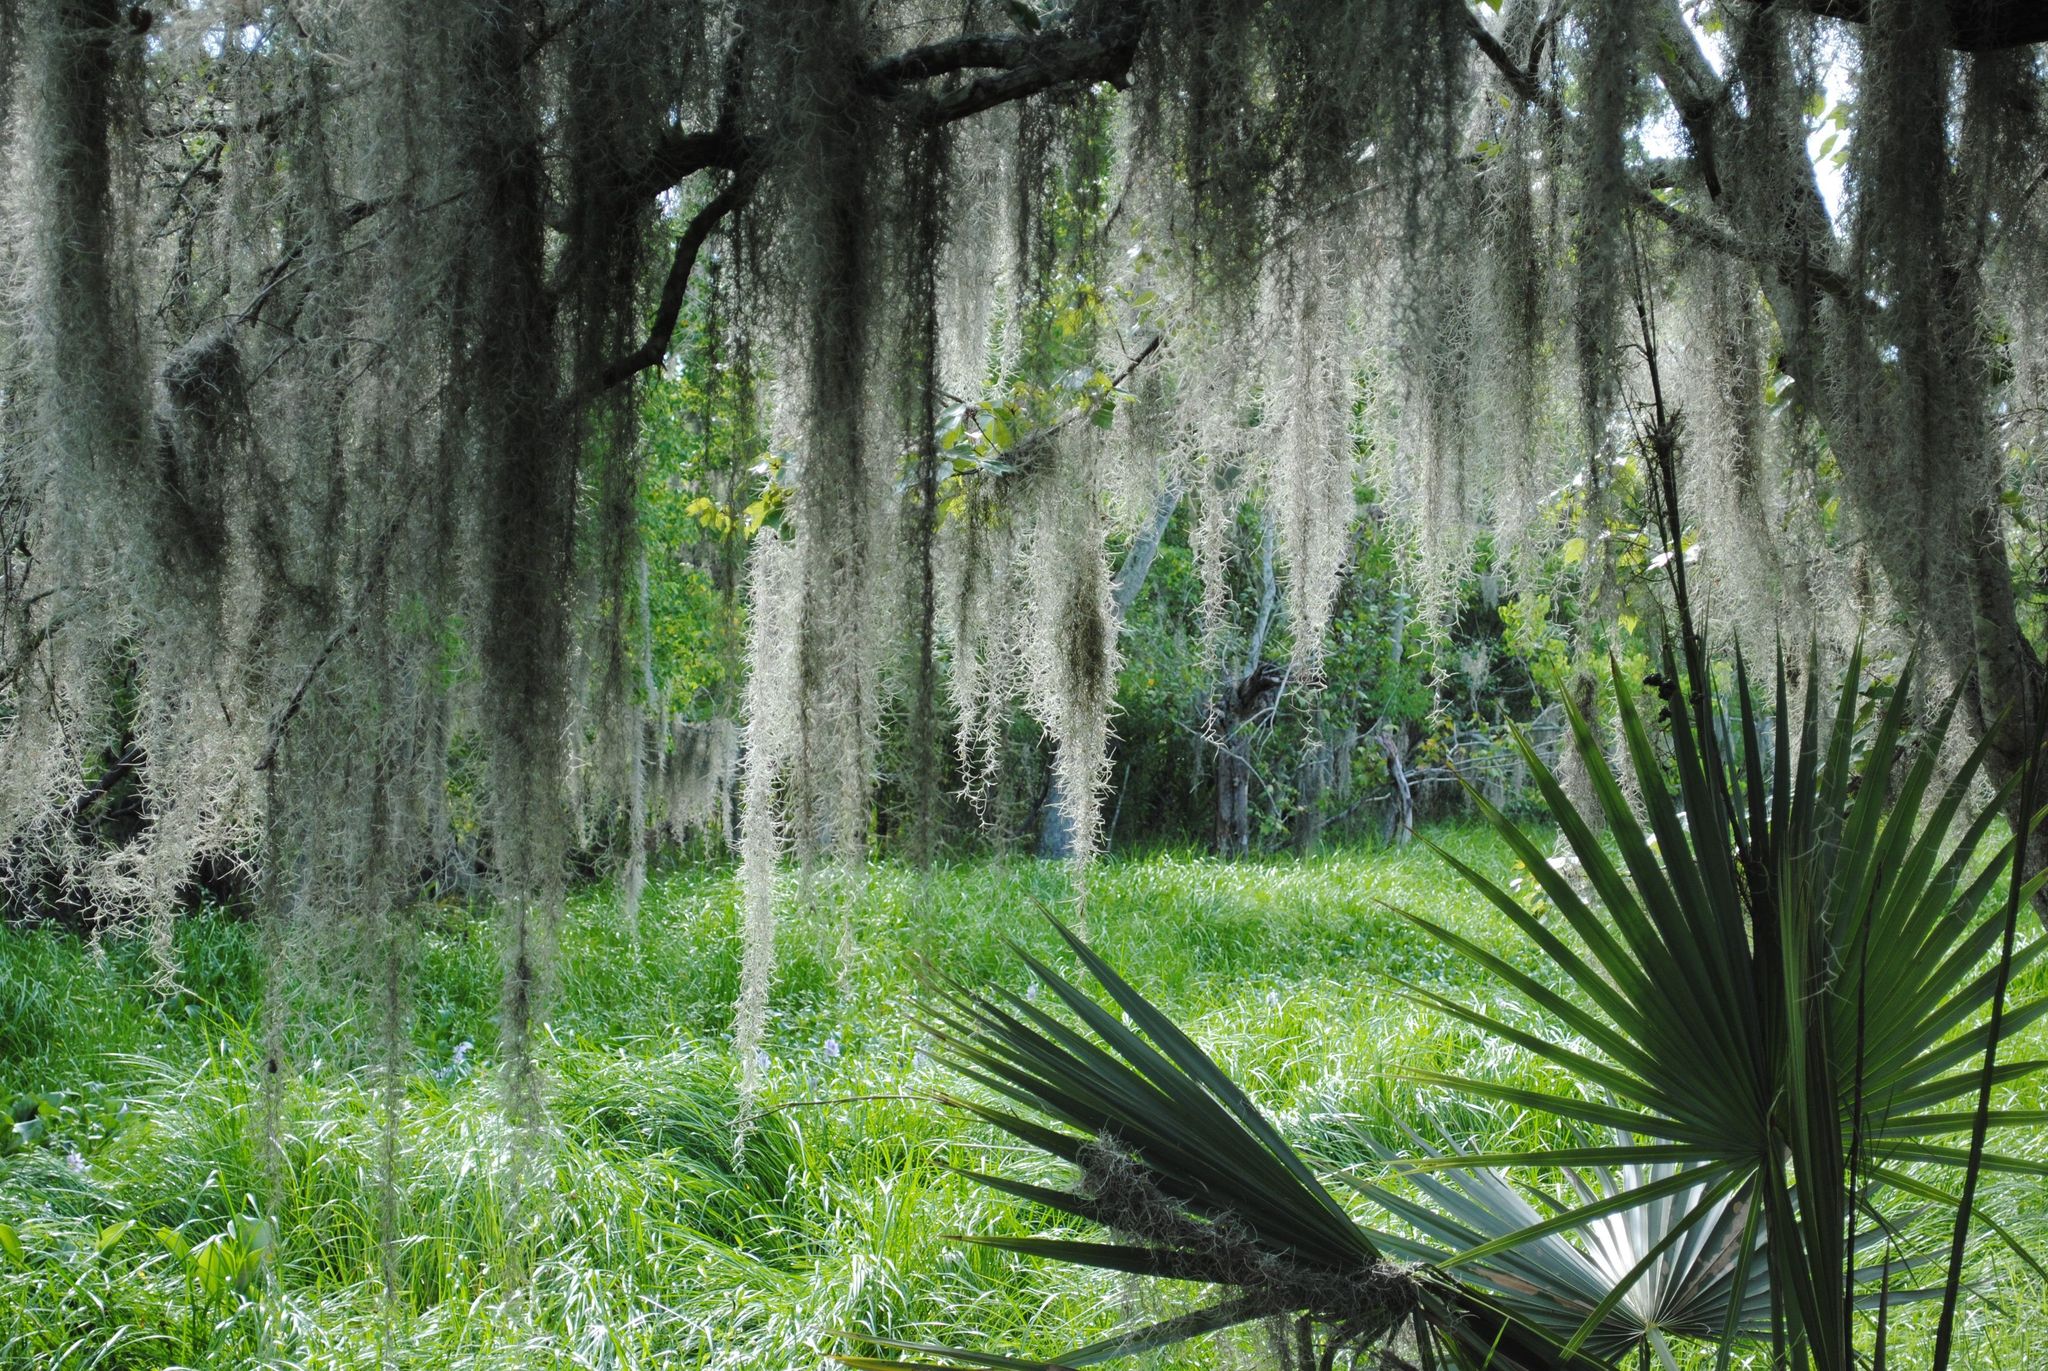 Spanish moss and lush vegetation provide glimpses of Louisiana's wild wetlands at Jean Lafitte's Barataria Preserve.